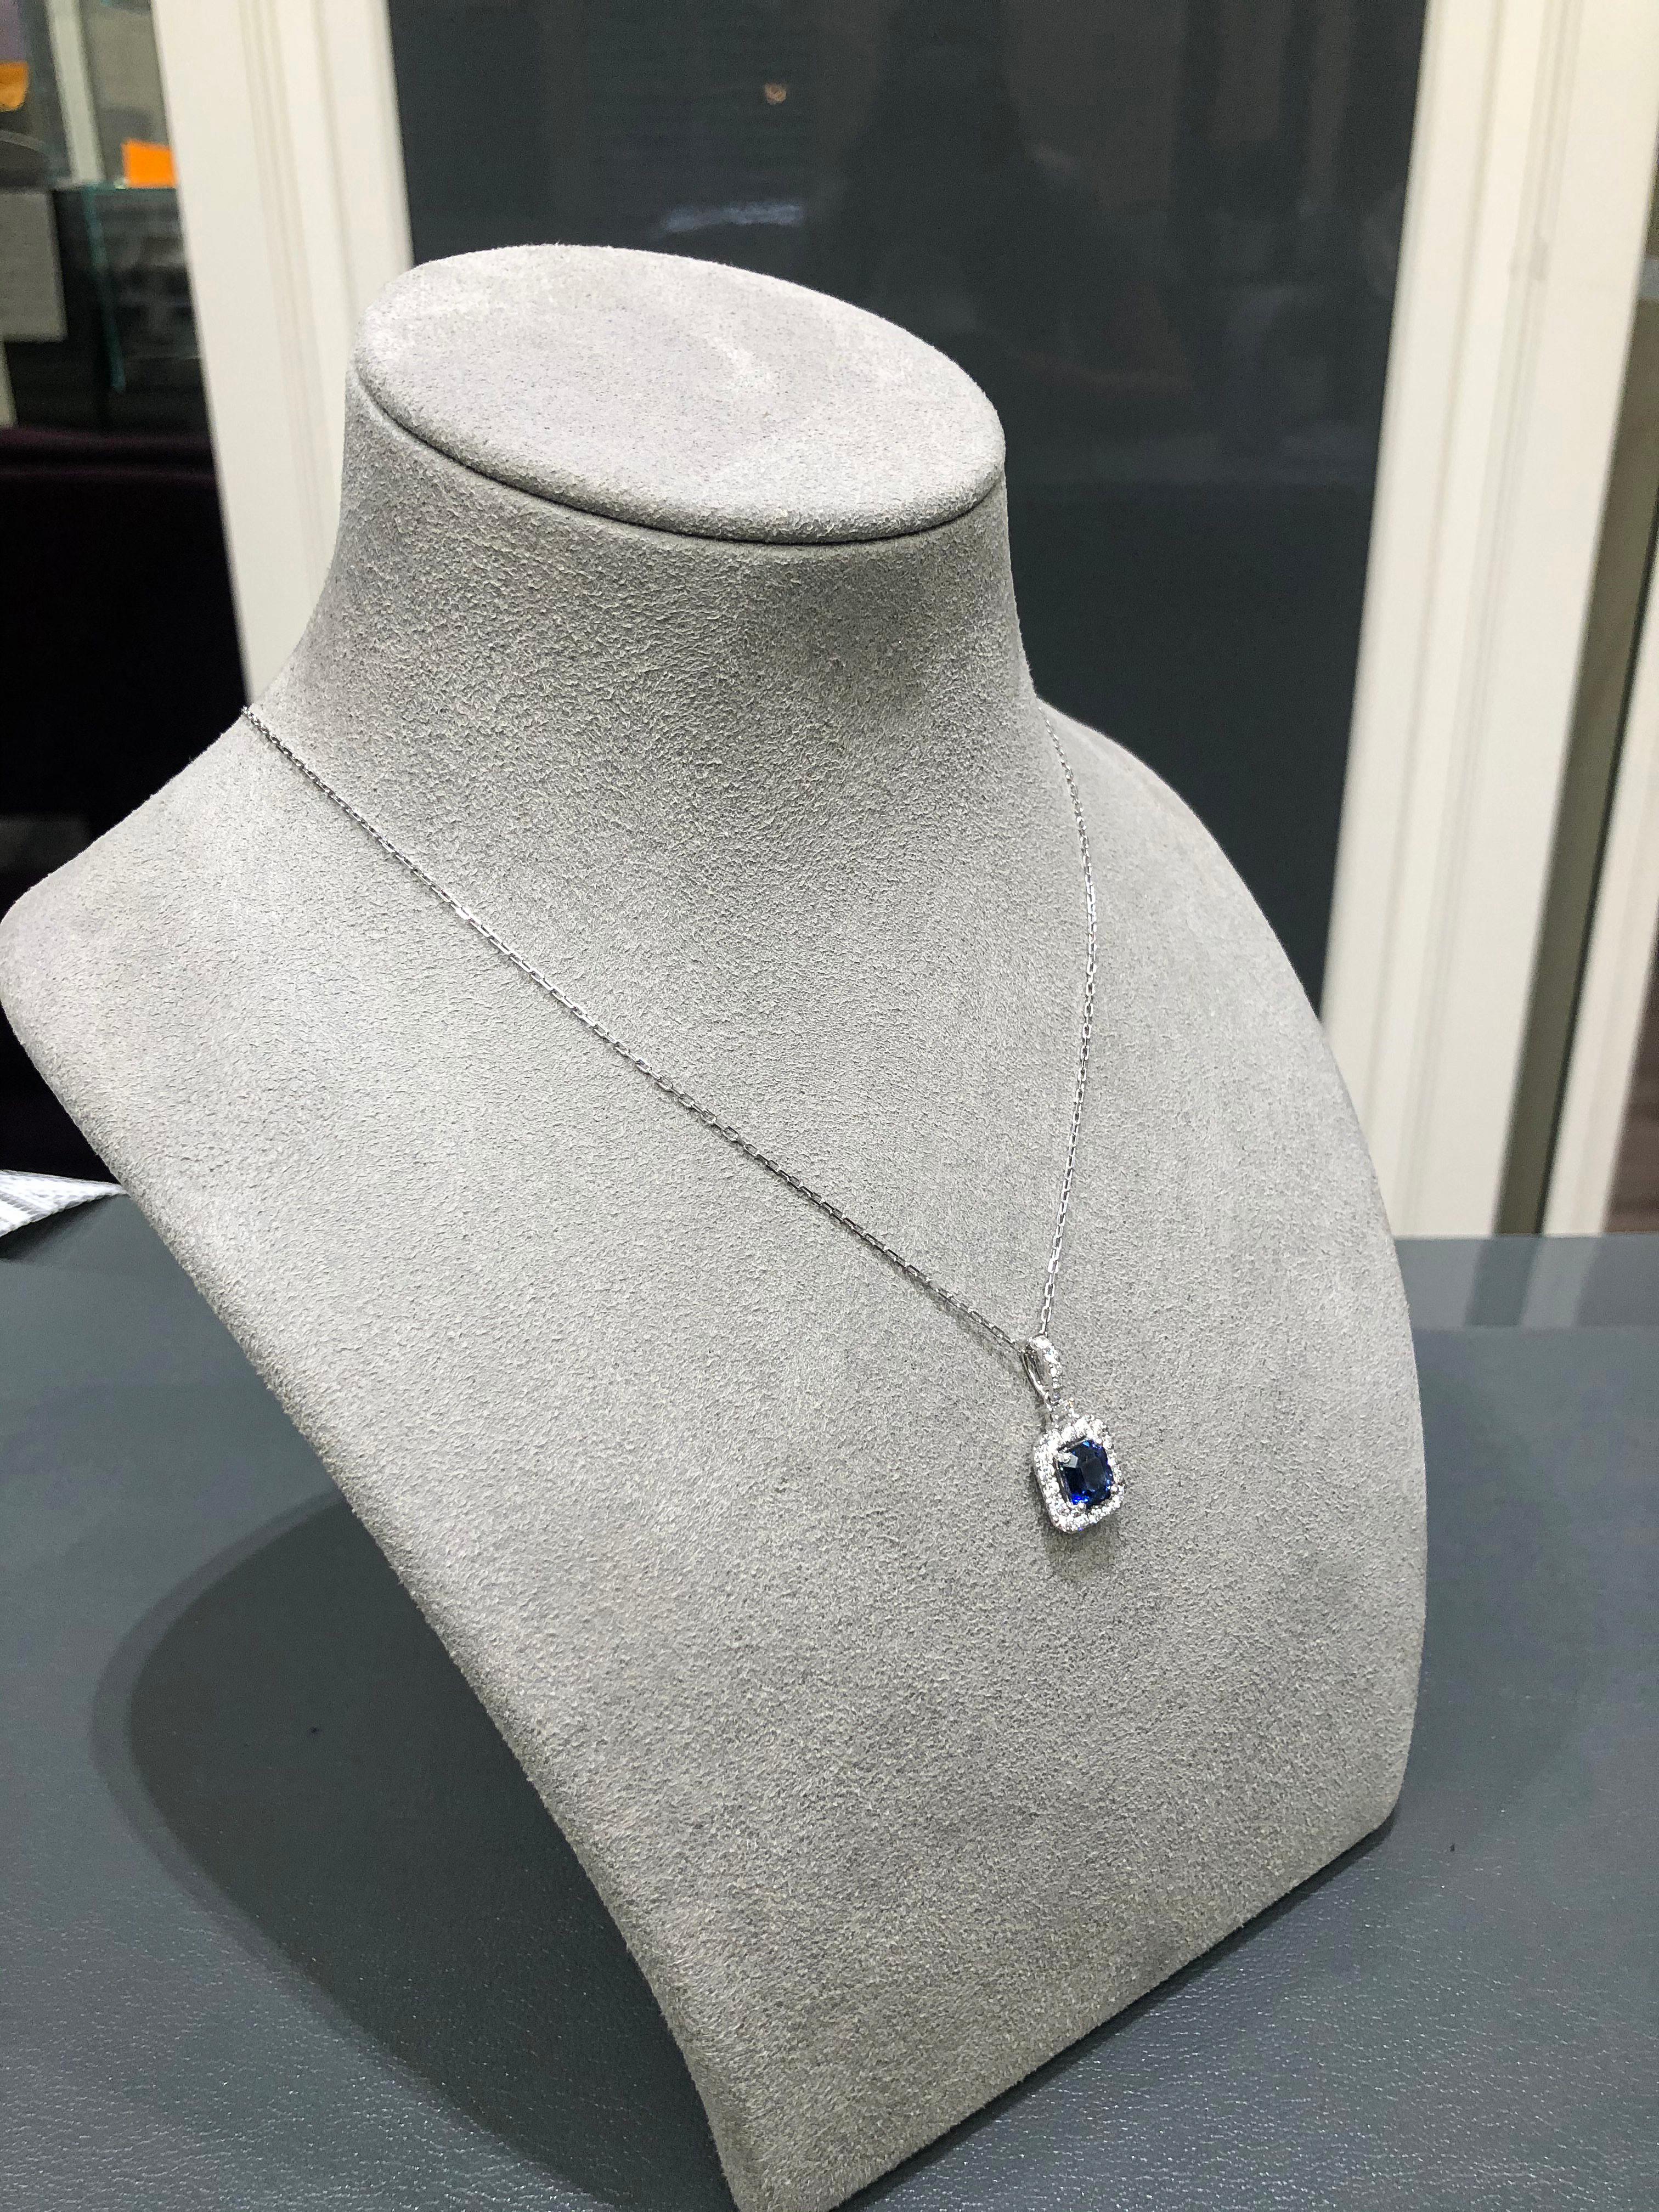 Roman Malakov 1.64 Carat Emerald Cut Sapphire with Diamond Halo Pendant Necklace For Sale 1